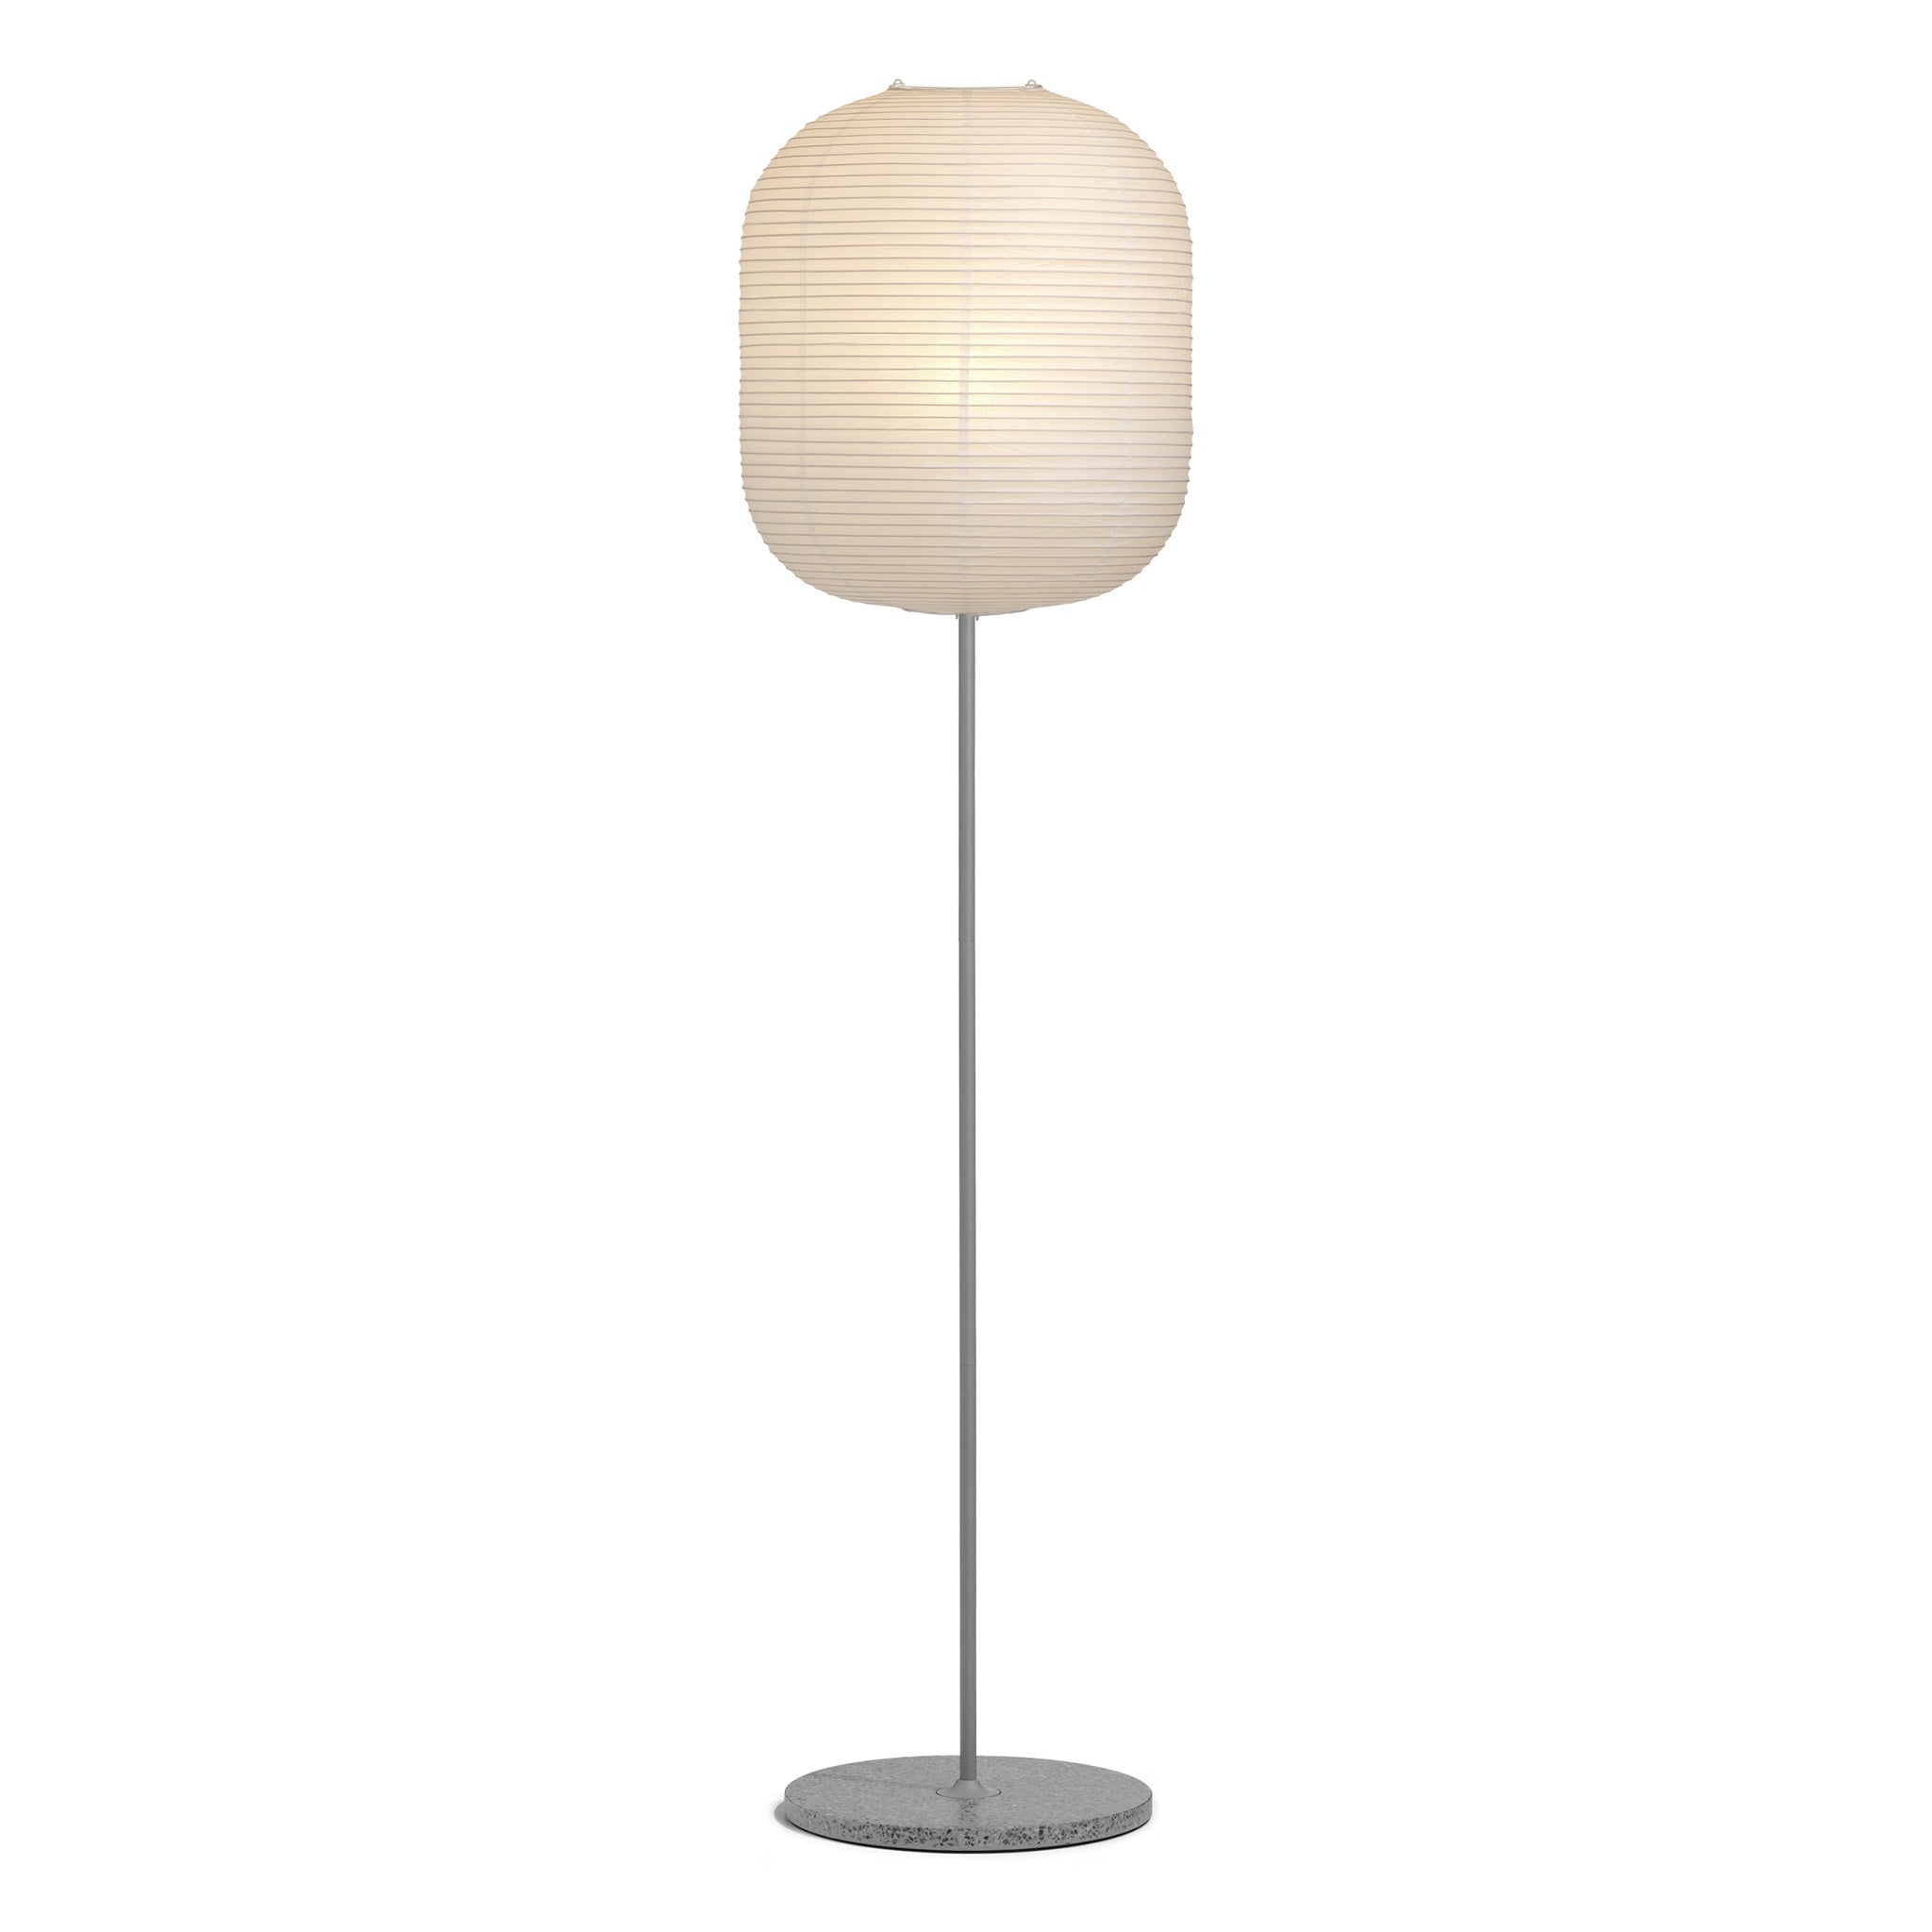 Common Floor Lamp By Hay